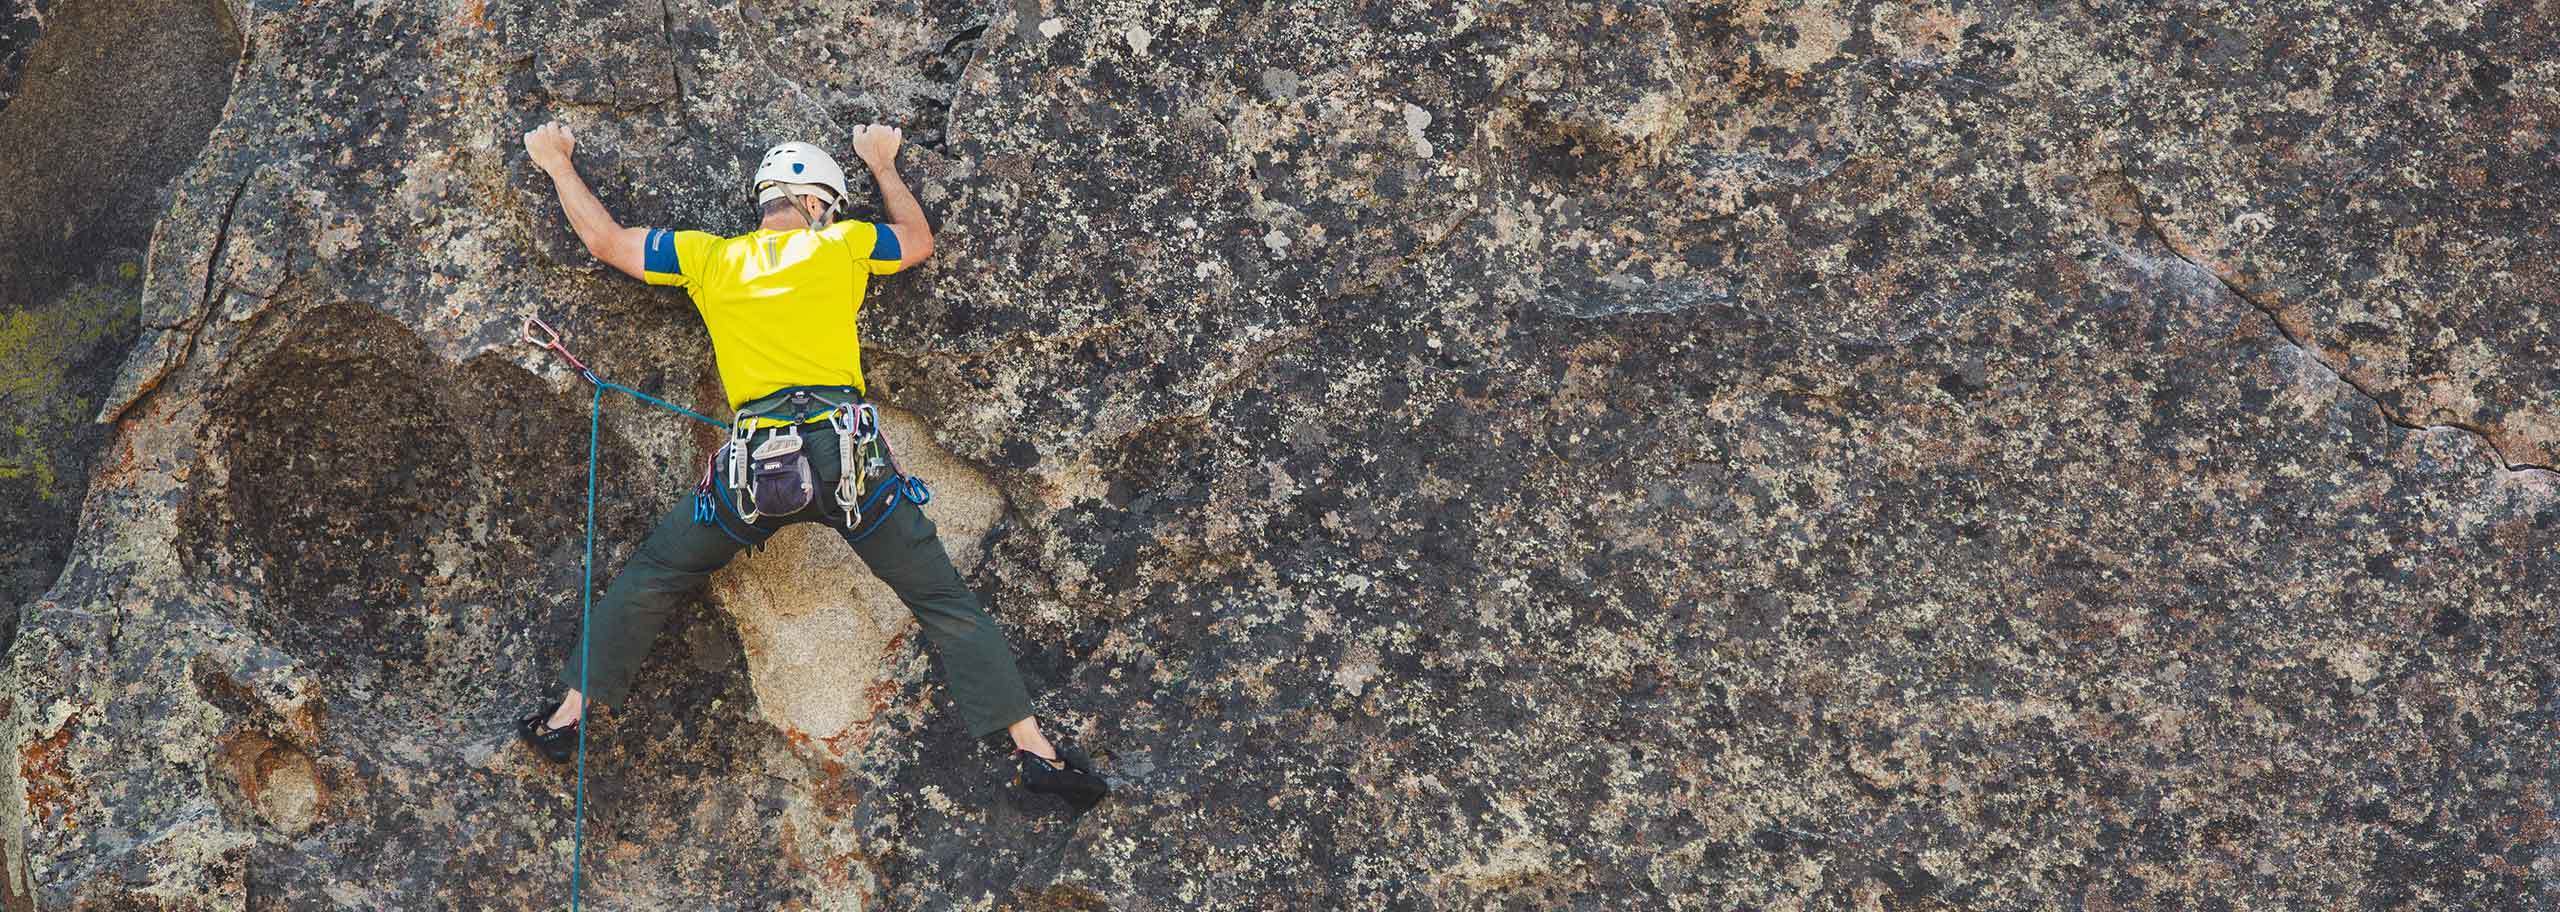 Rock Climbing in Pragelato, Trad & Sport Climbing